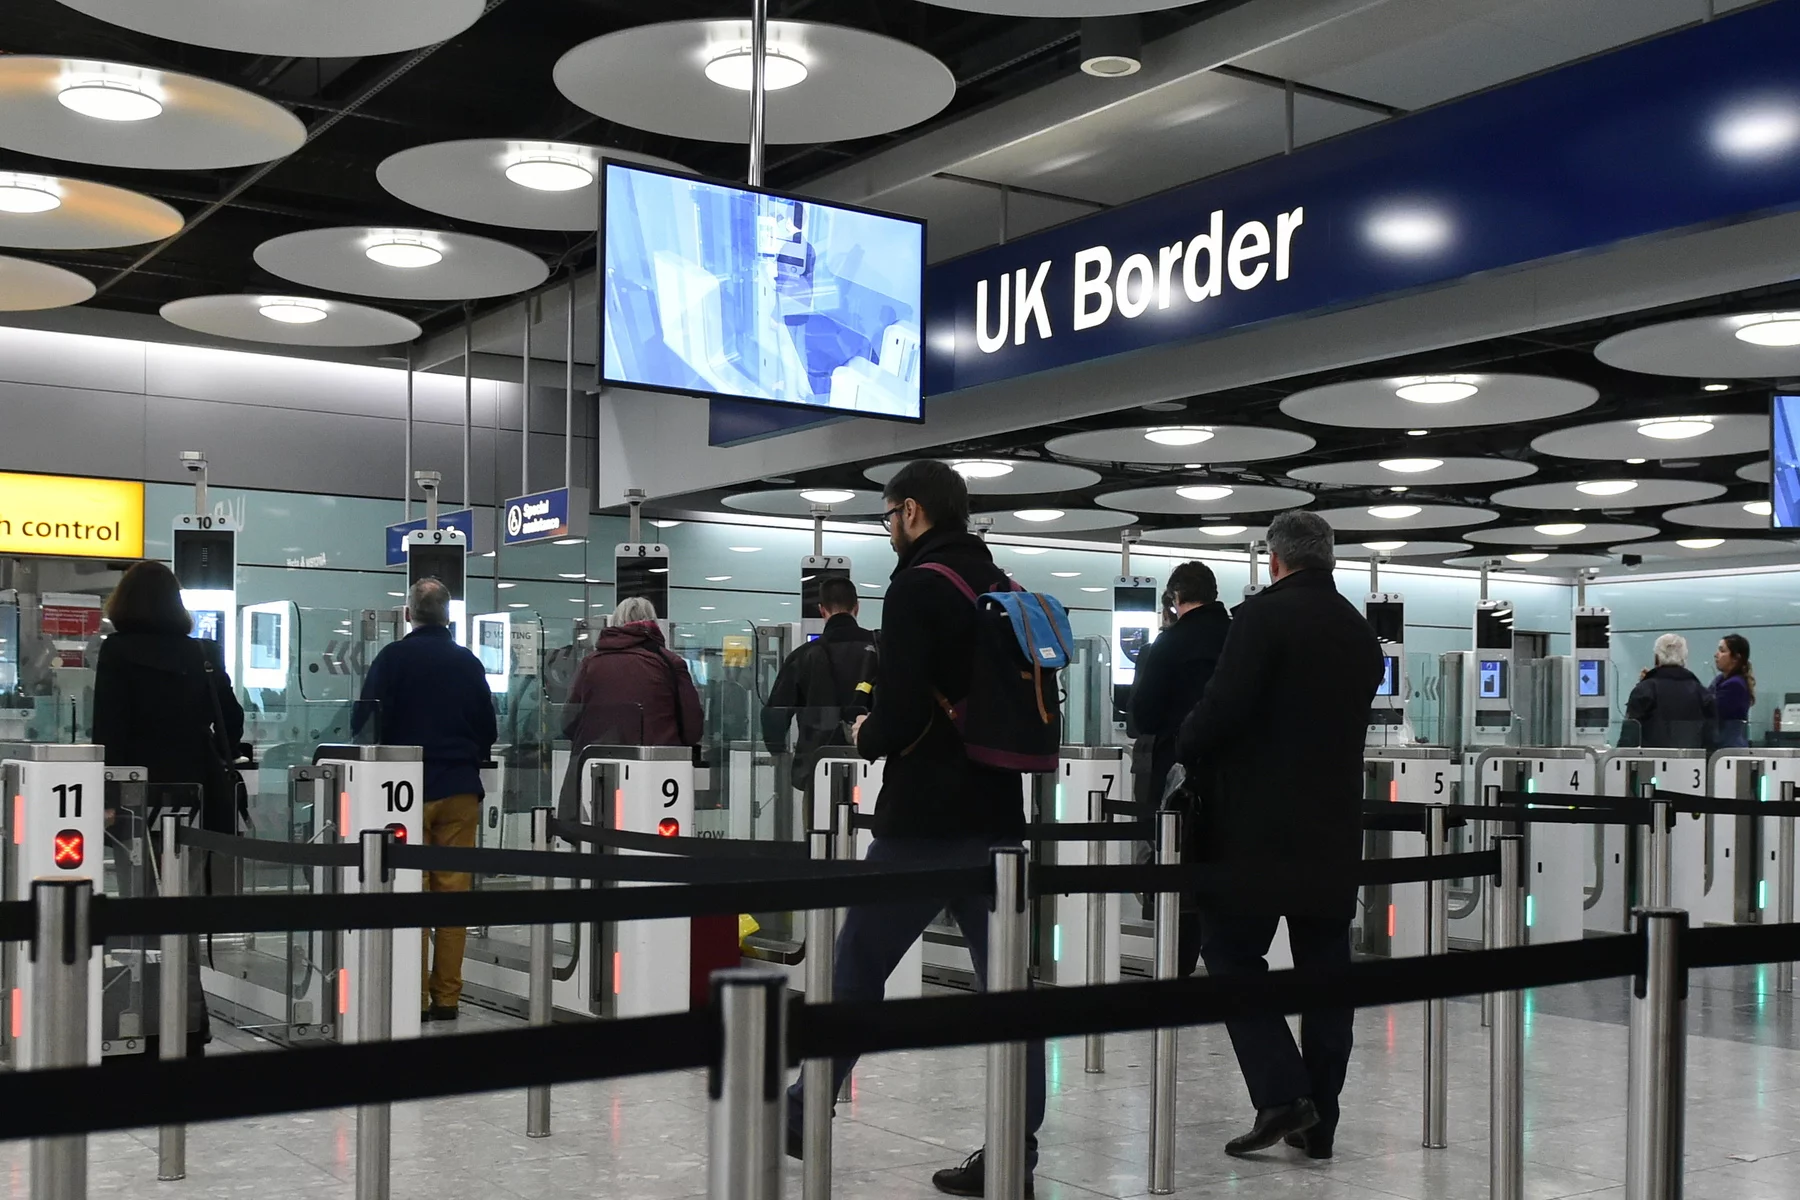 UK border control at an airport